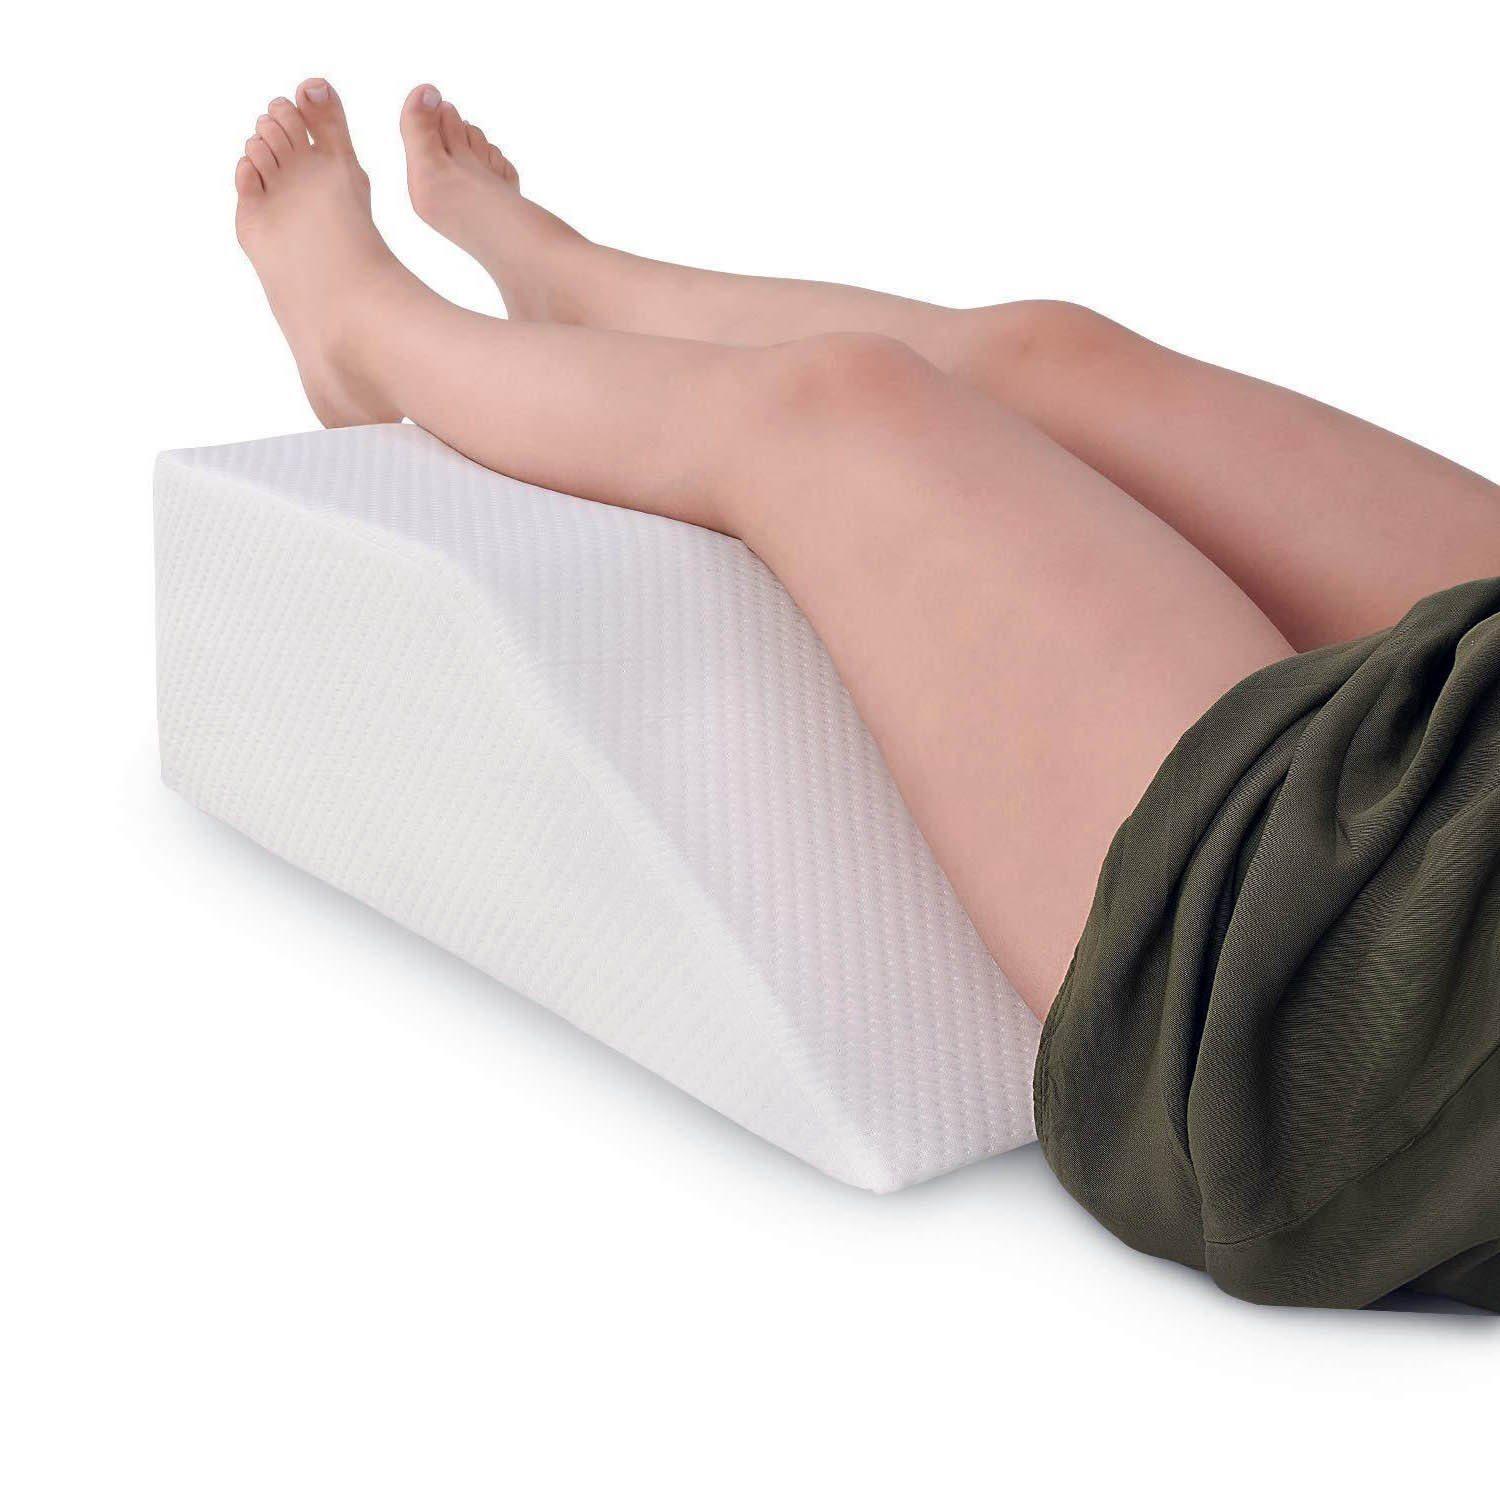 View Elevating Leg Rest Pillow information